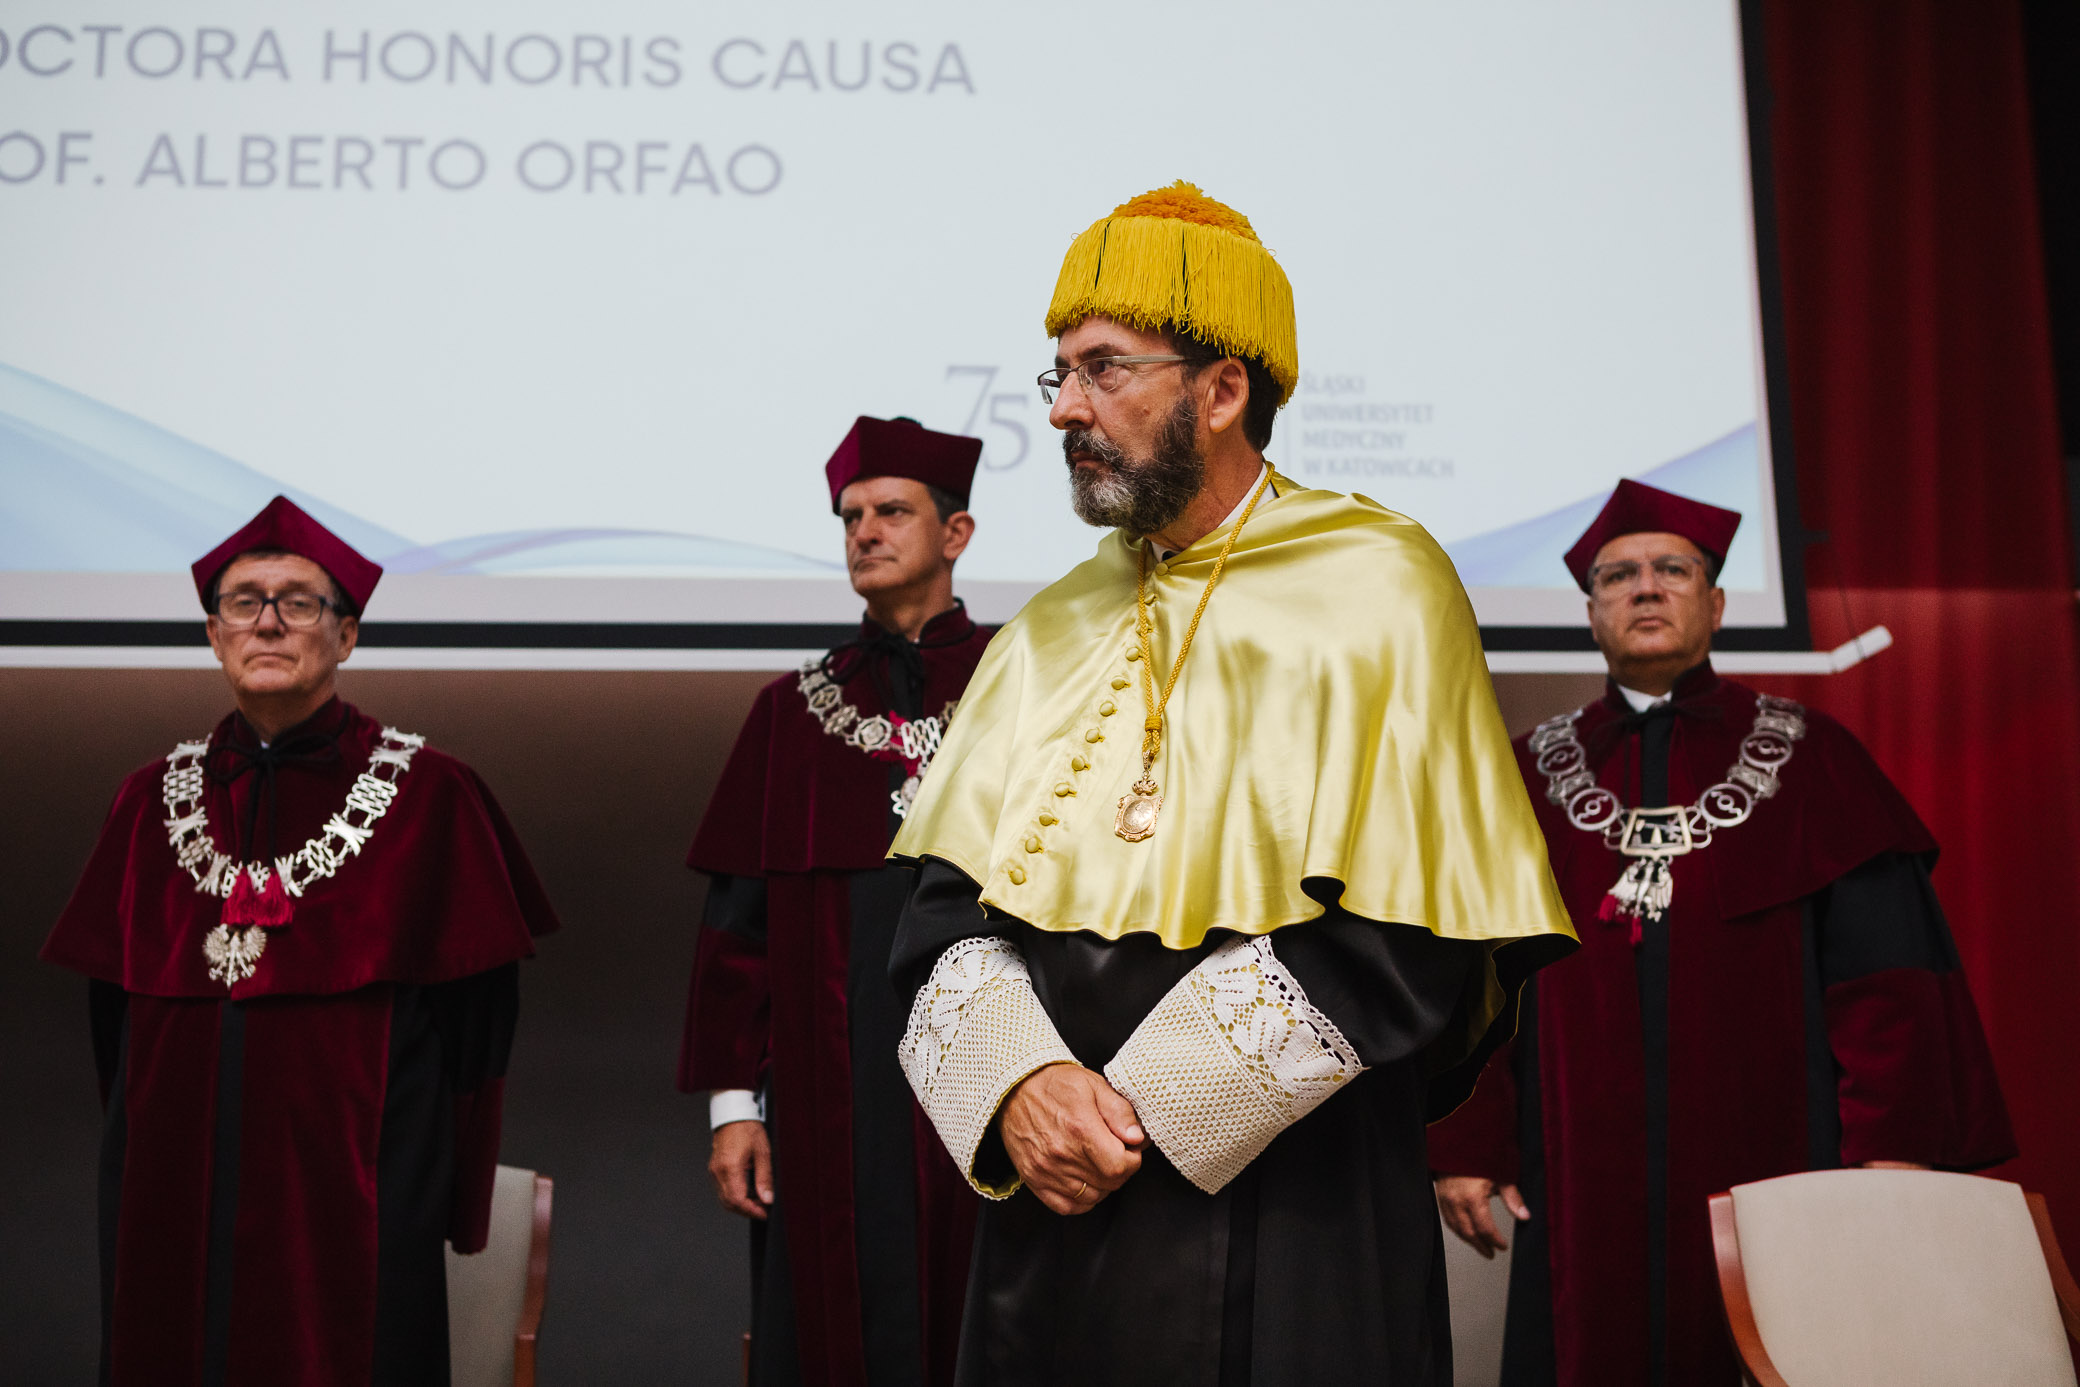 Alberto Orfao, doctor ‘honoris causa’ por la Universidad polaca de Medicina de Silesia en Katowice